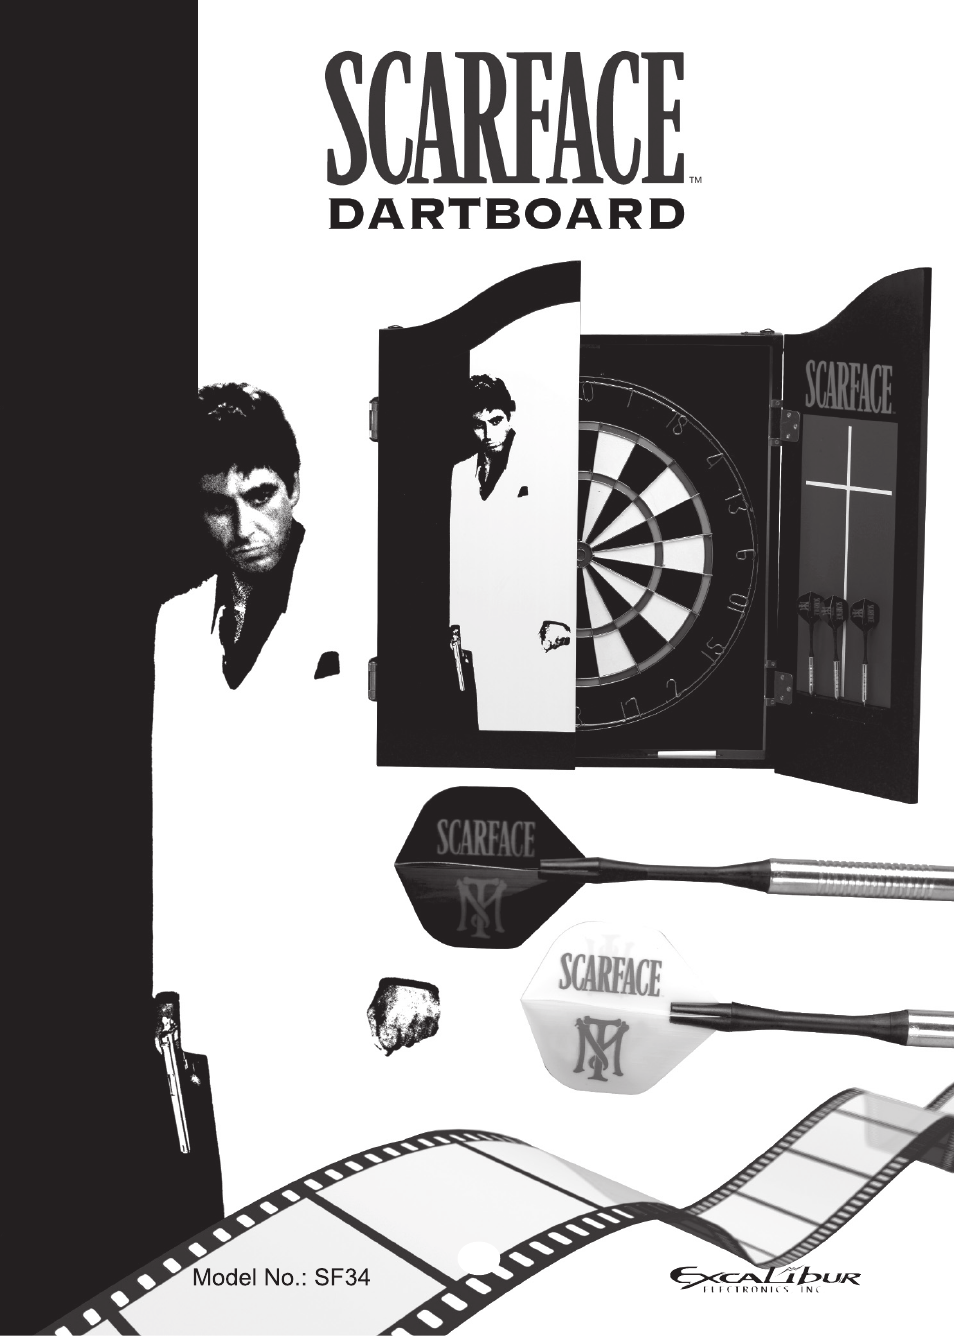 SF34 Scarface Dartboard